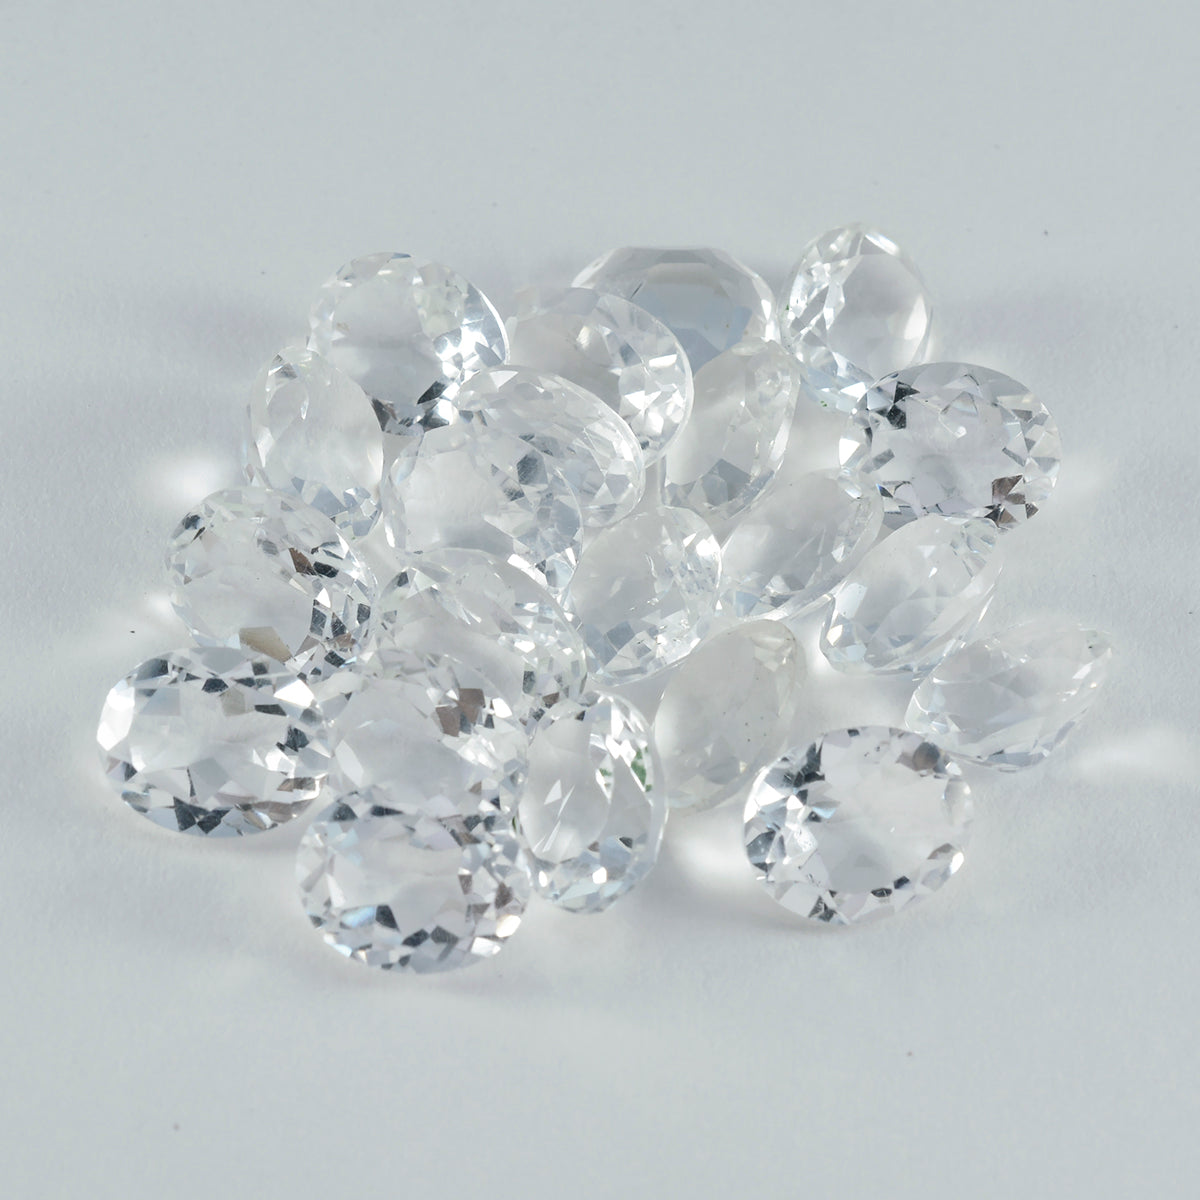 Riyogems 1PC wit kristalkwarts gefacetteerd 6x8 mm ovale vorm knappe kwaliteitsedelstenen